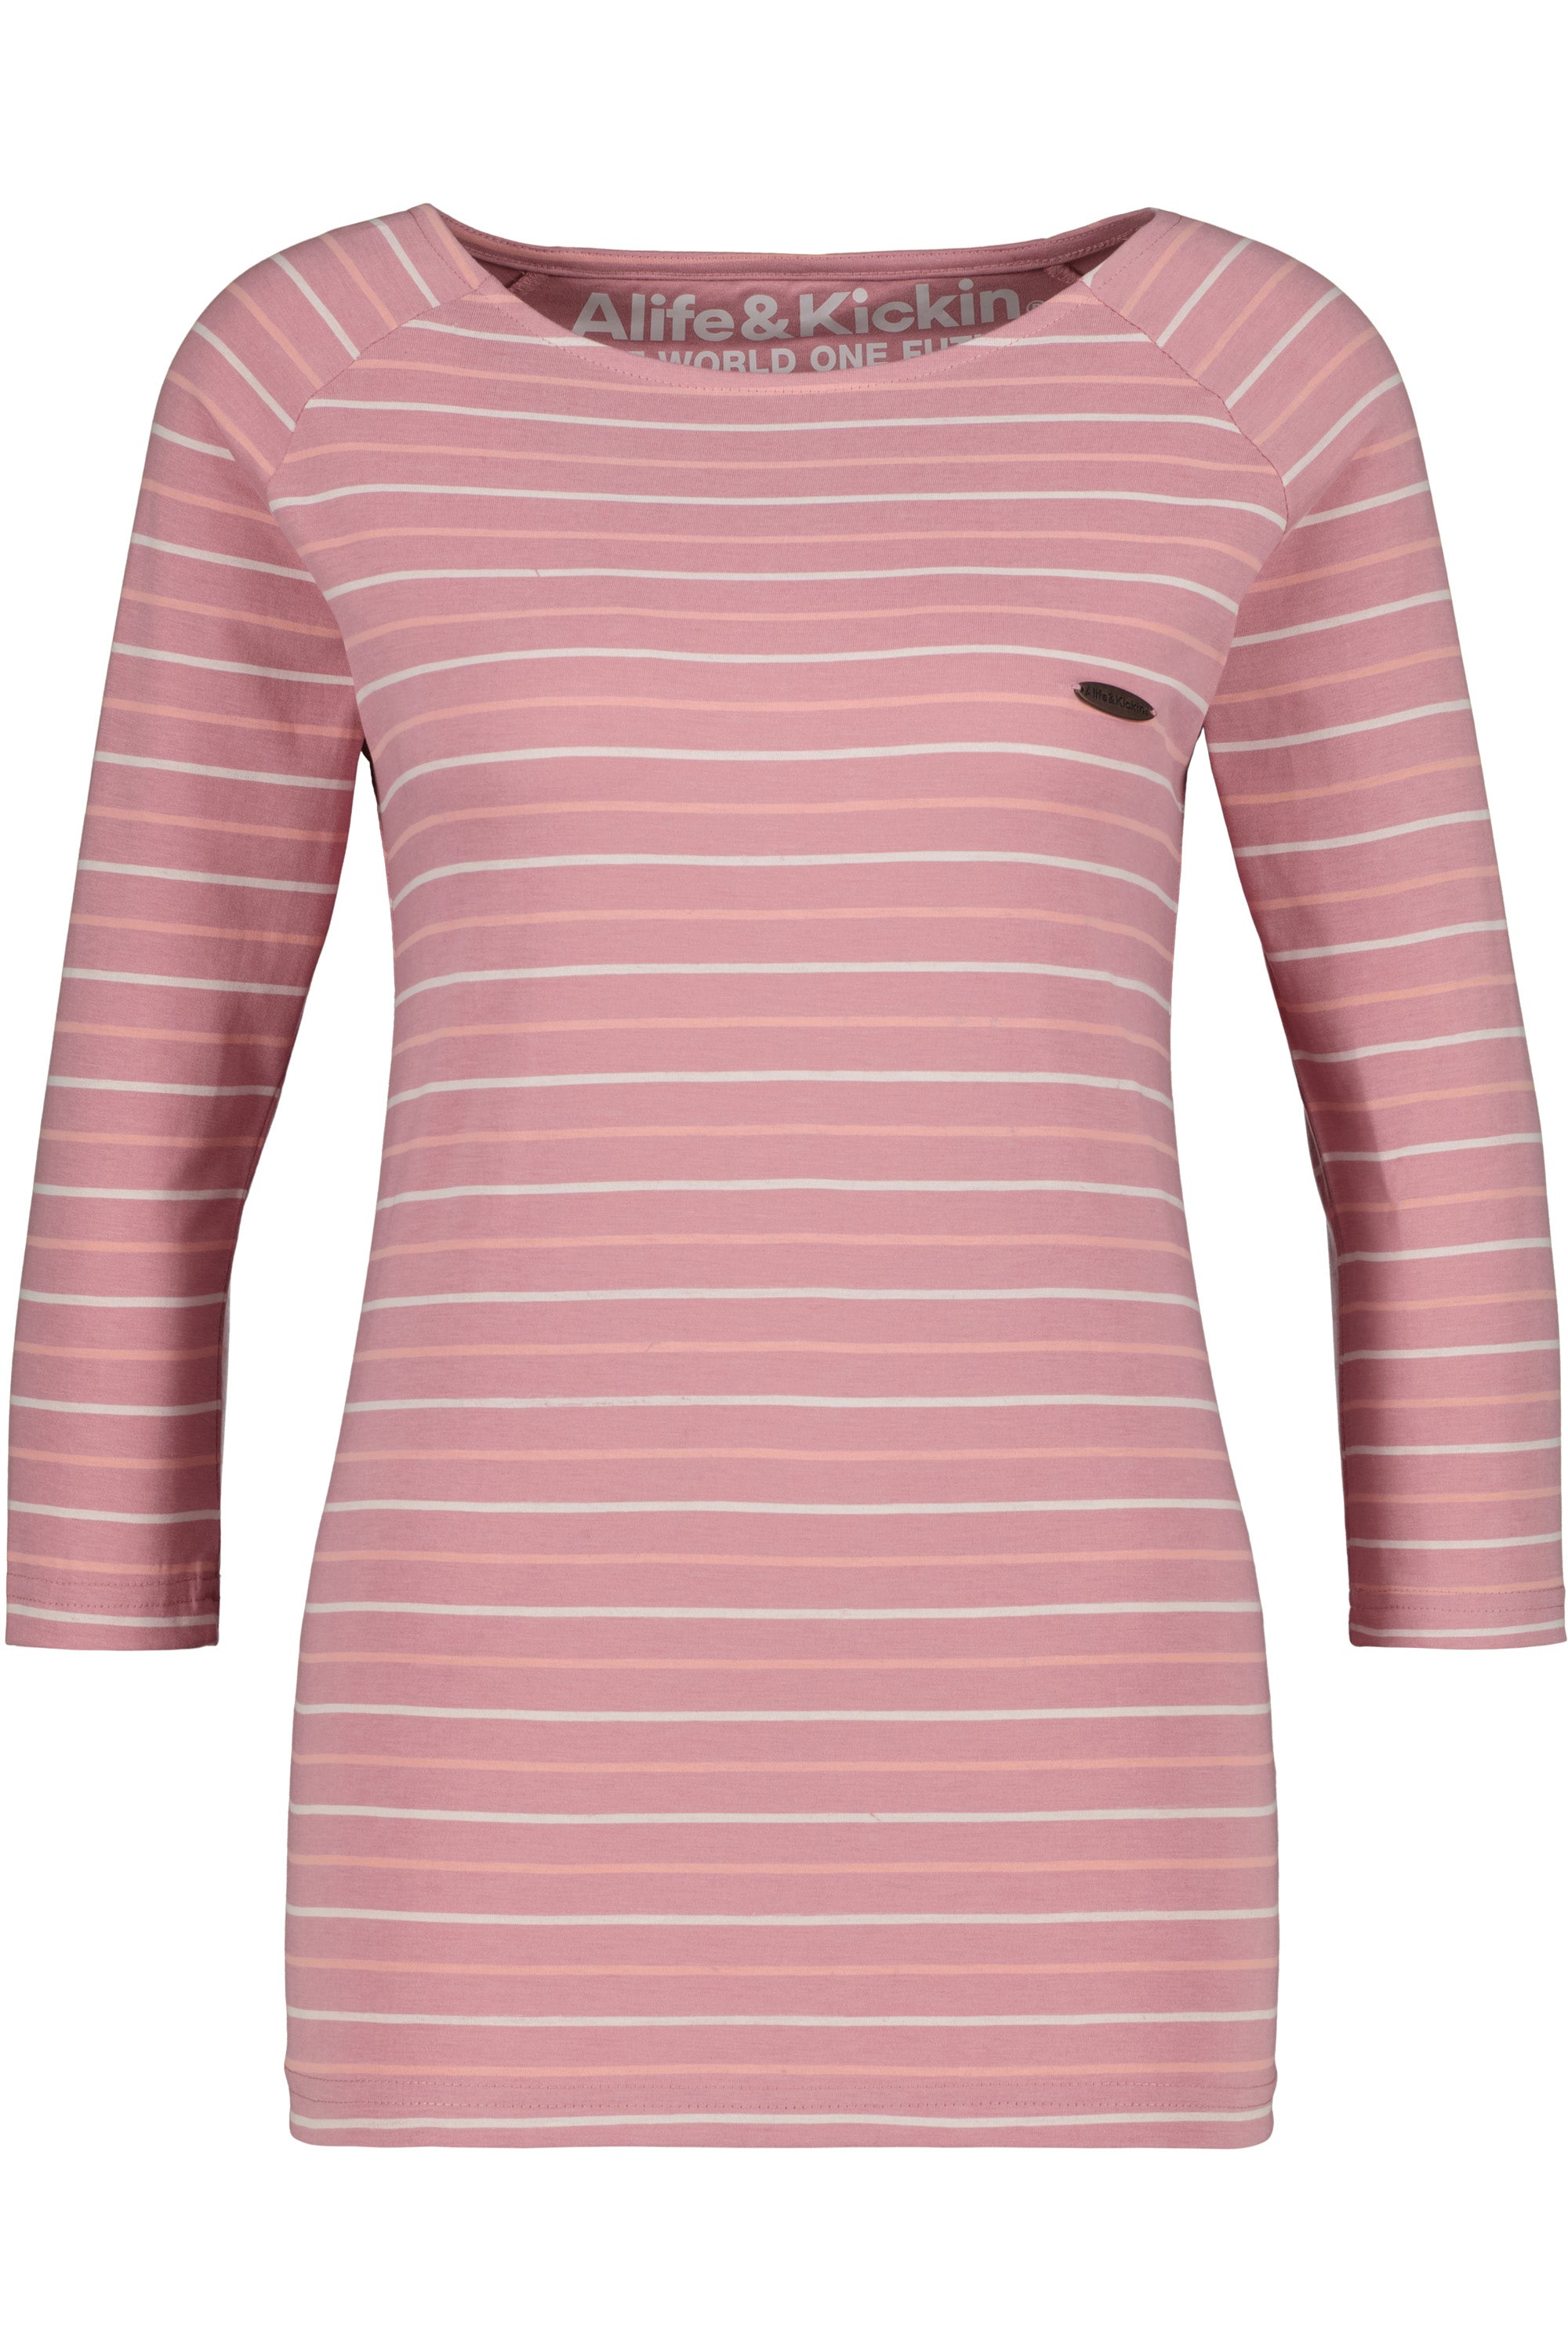 Streifenliebe - VickyAK Z Damen Langarmshirt in trendigem Design Rosa